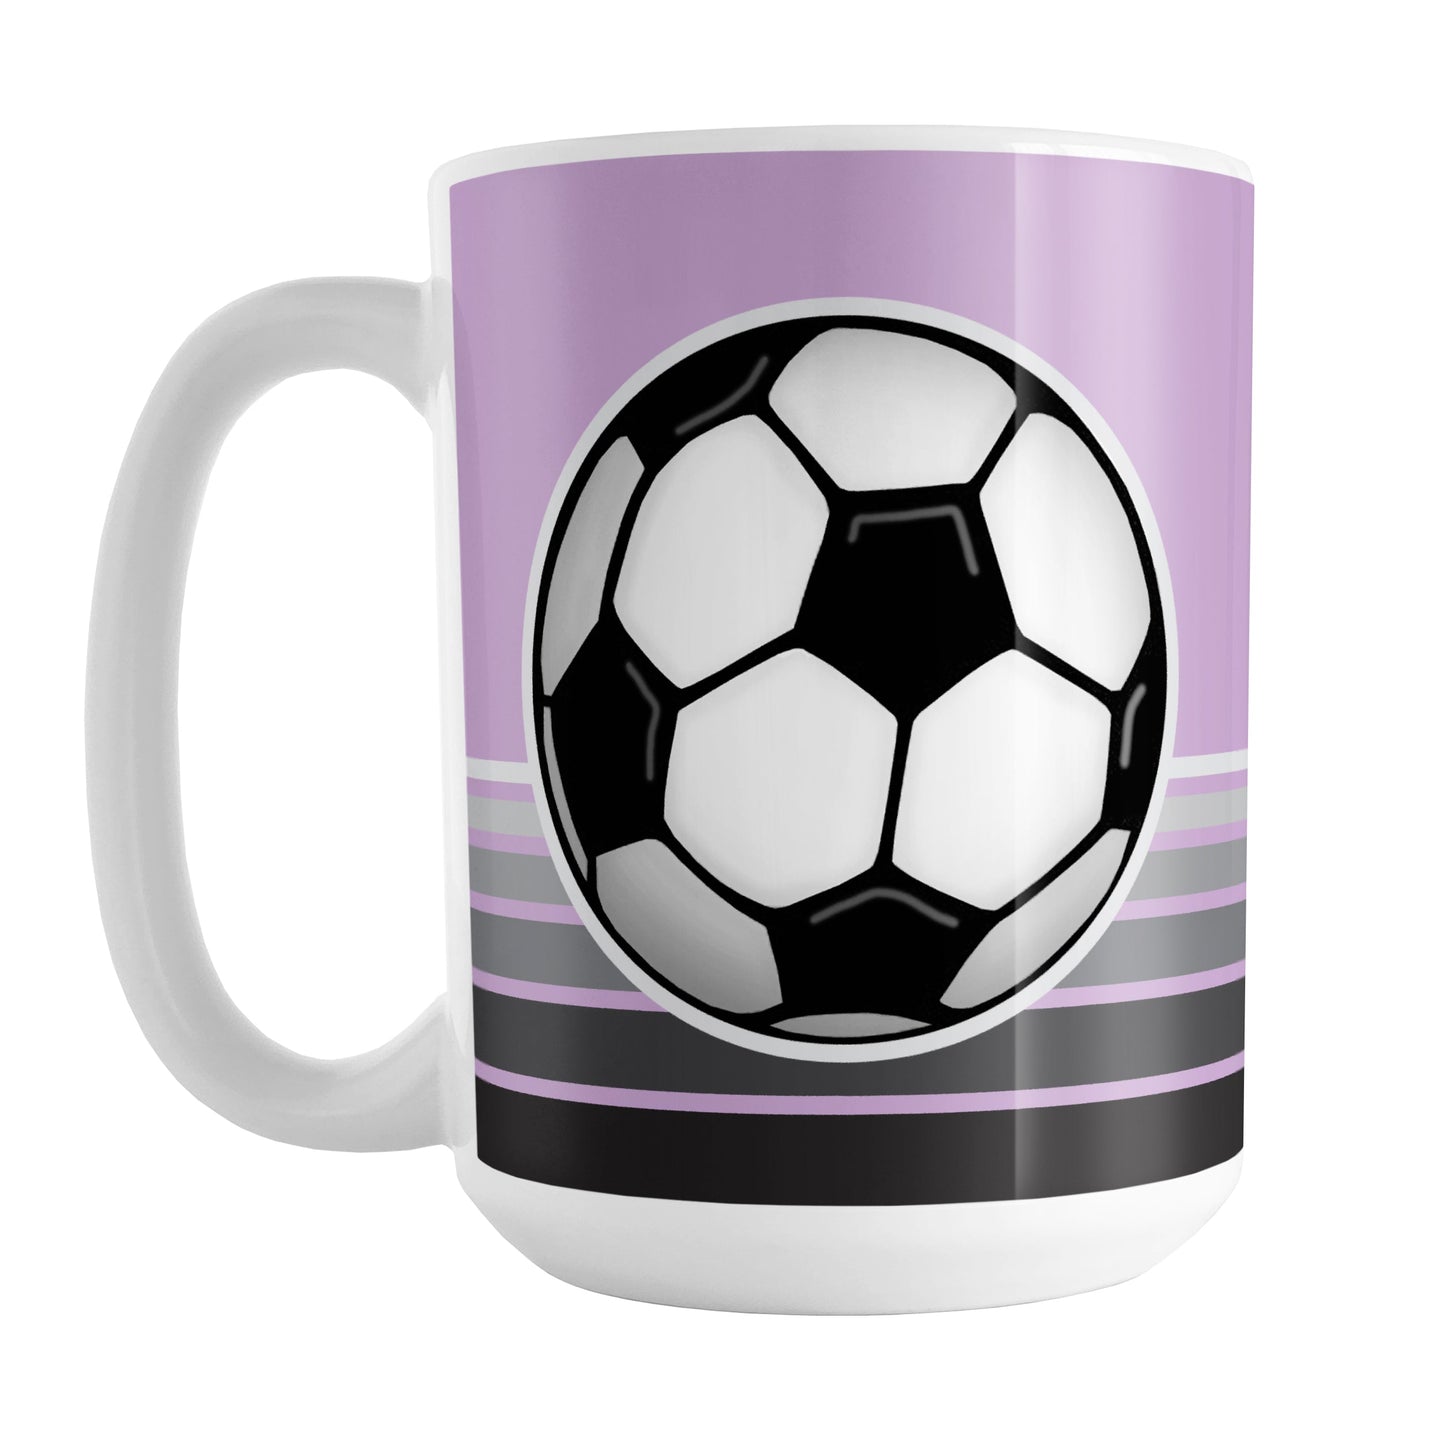 Gray Gradient Lined Purple Soccer Ball Mug (15oz) at Amy's Coffee Mugs